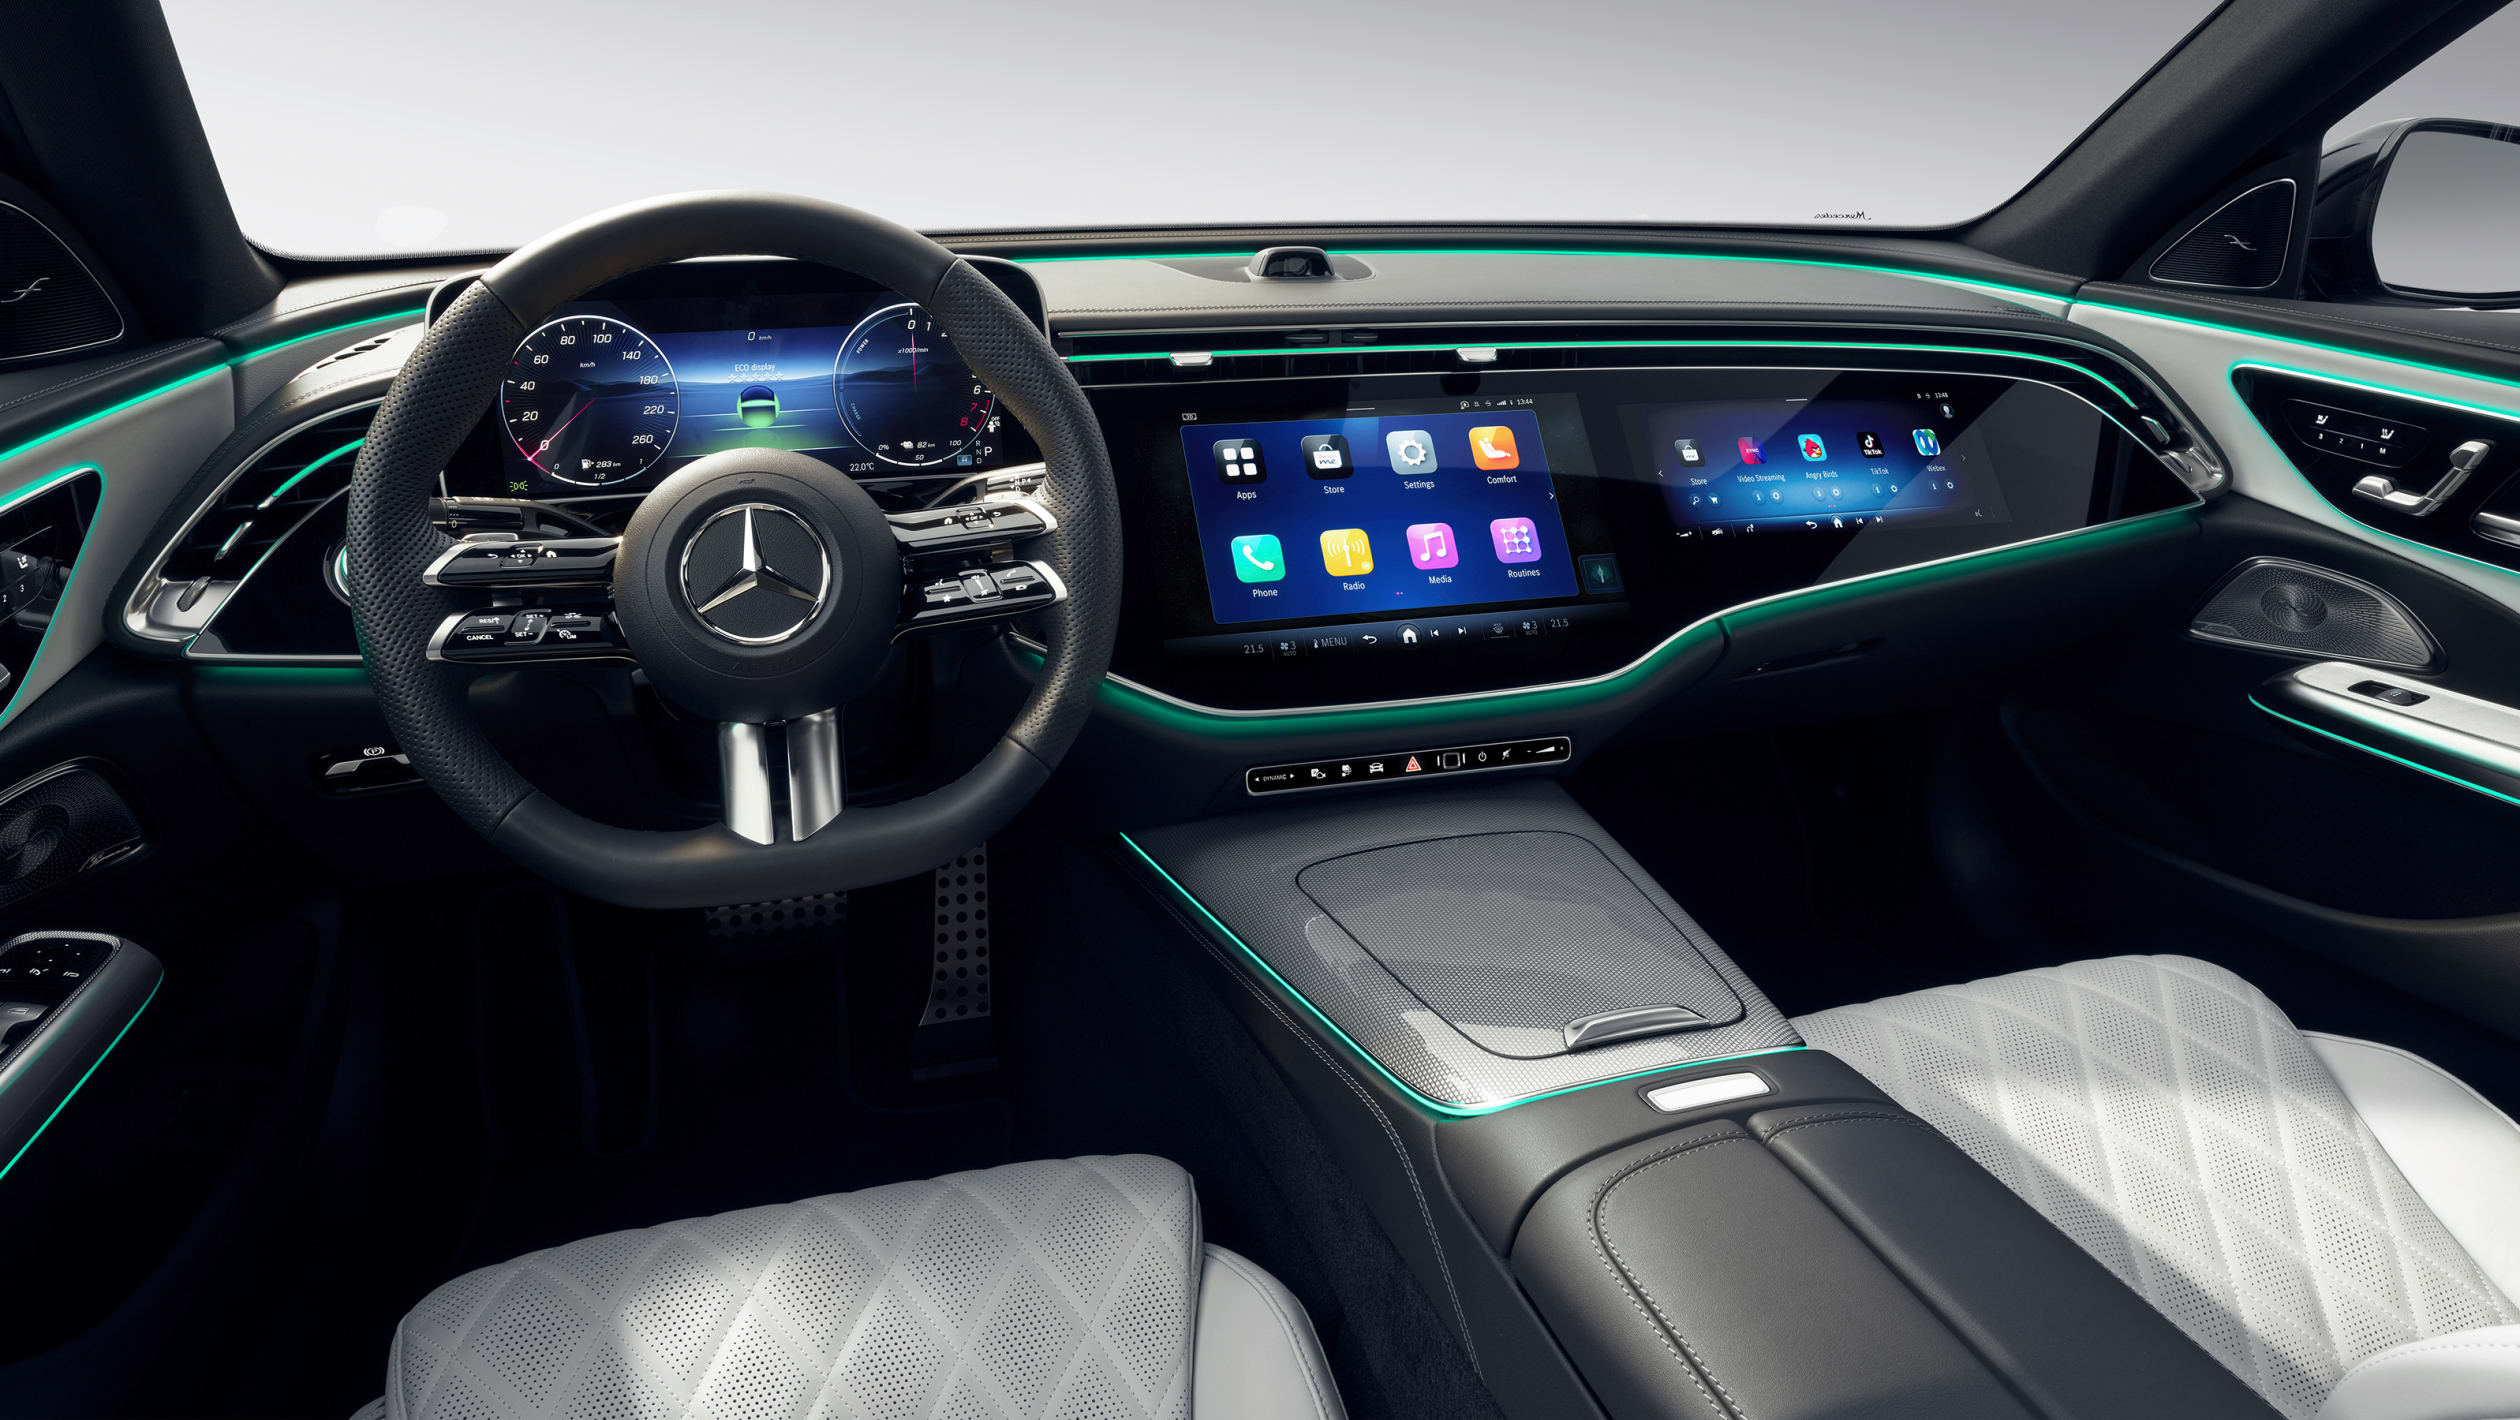 Mercedes E-Class - interior